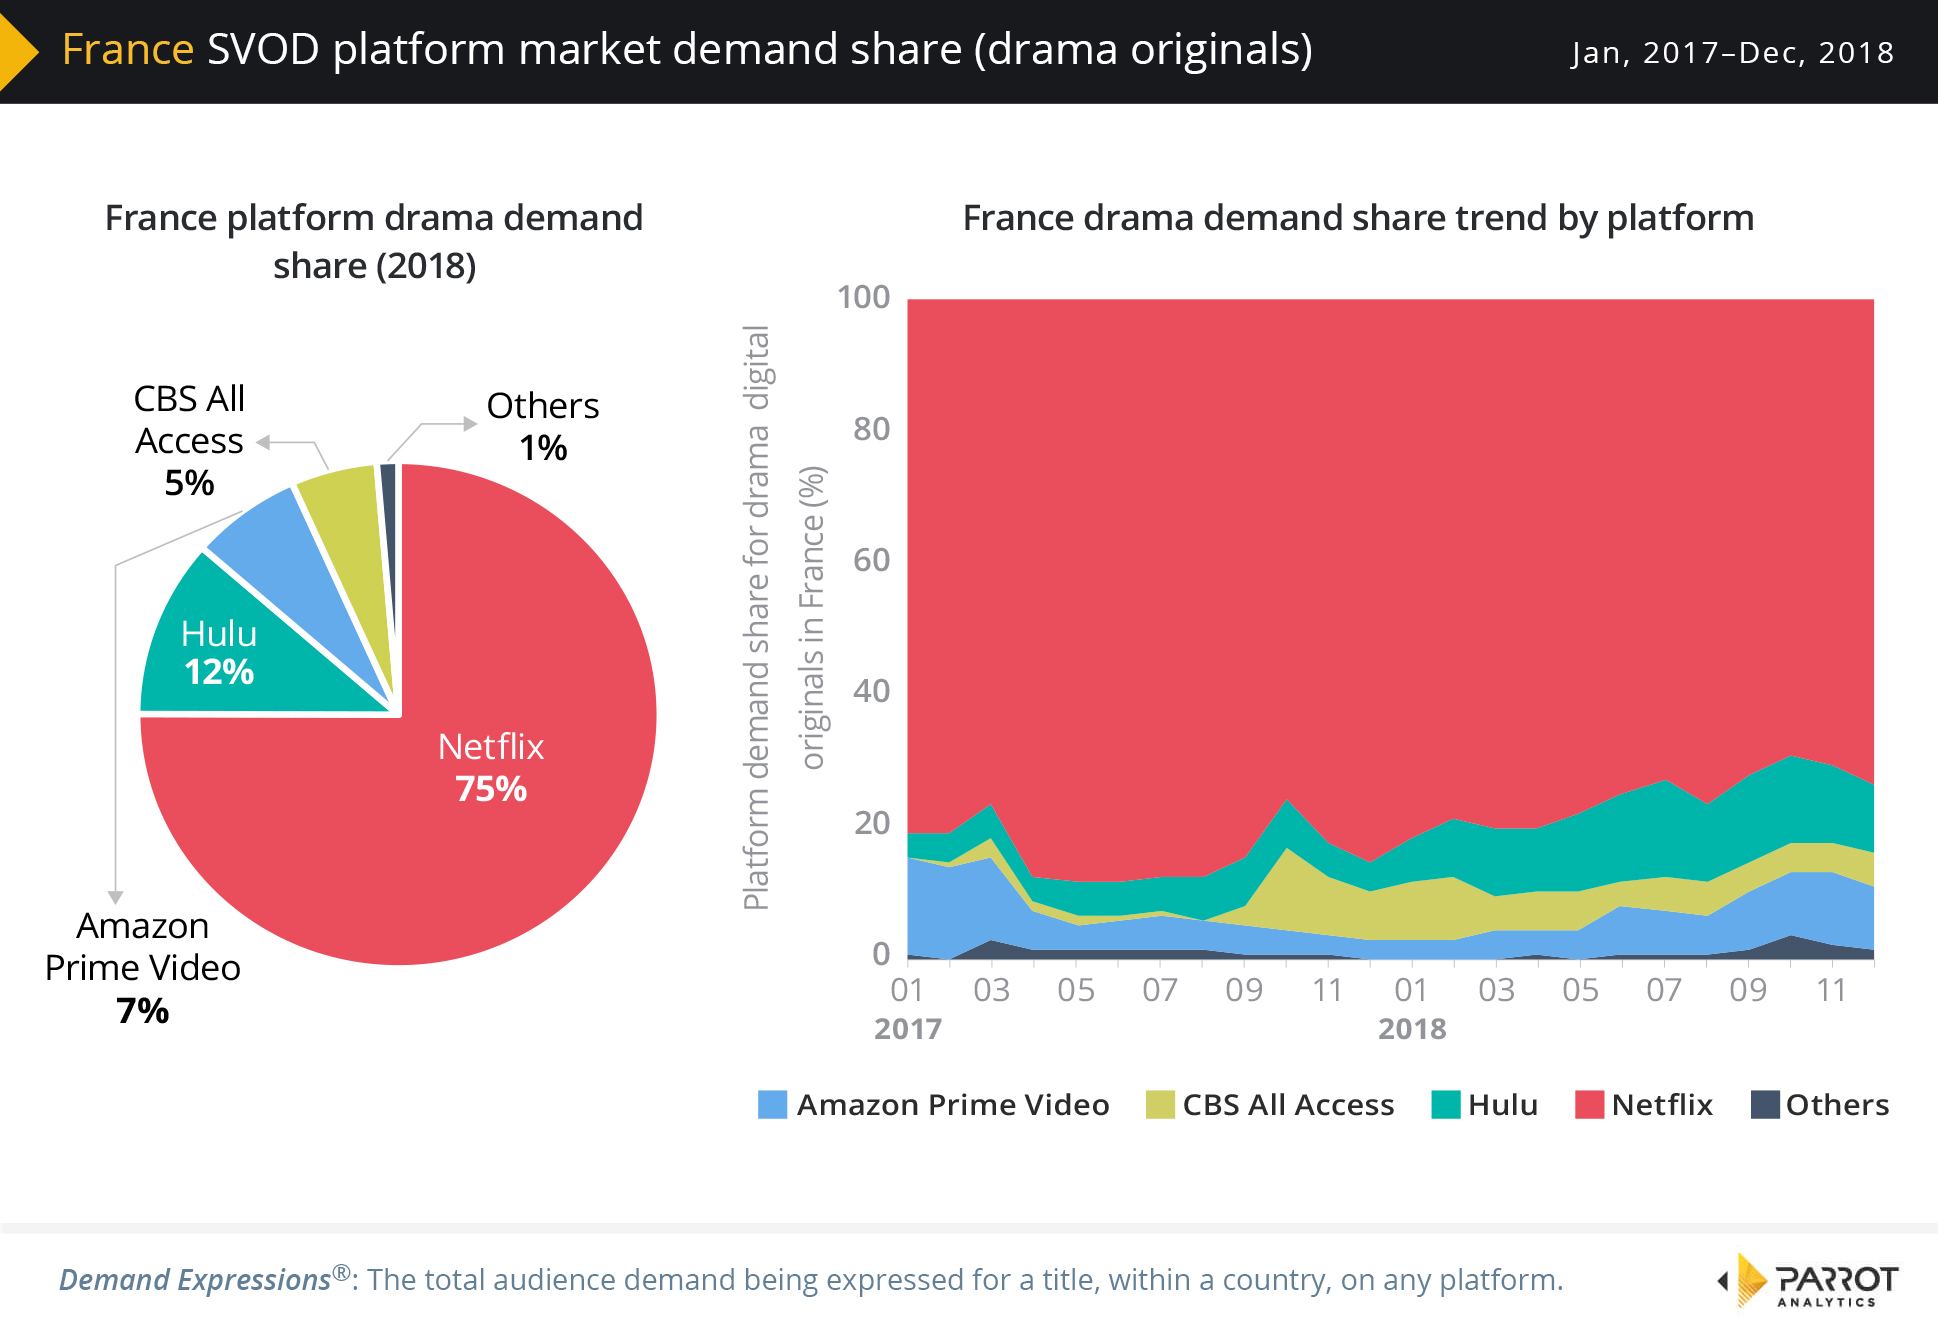 France SVOD market share trends based on audience demand for digital originals Parrot Analytics